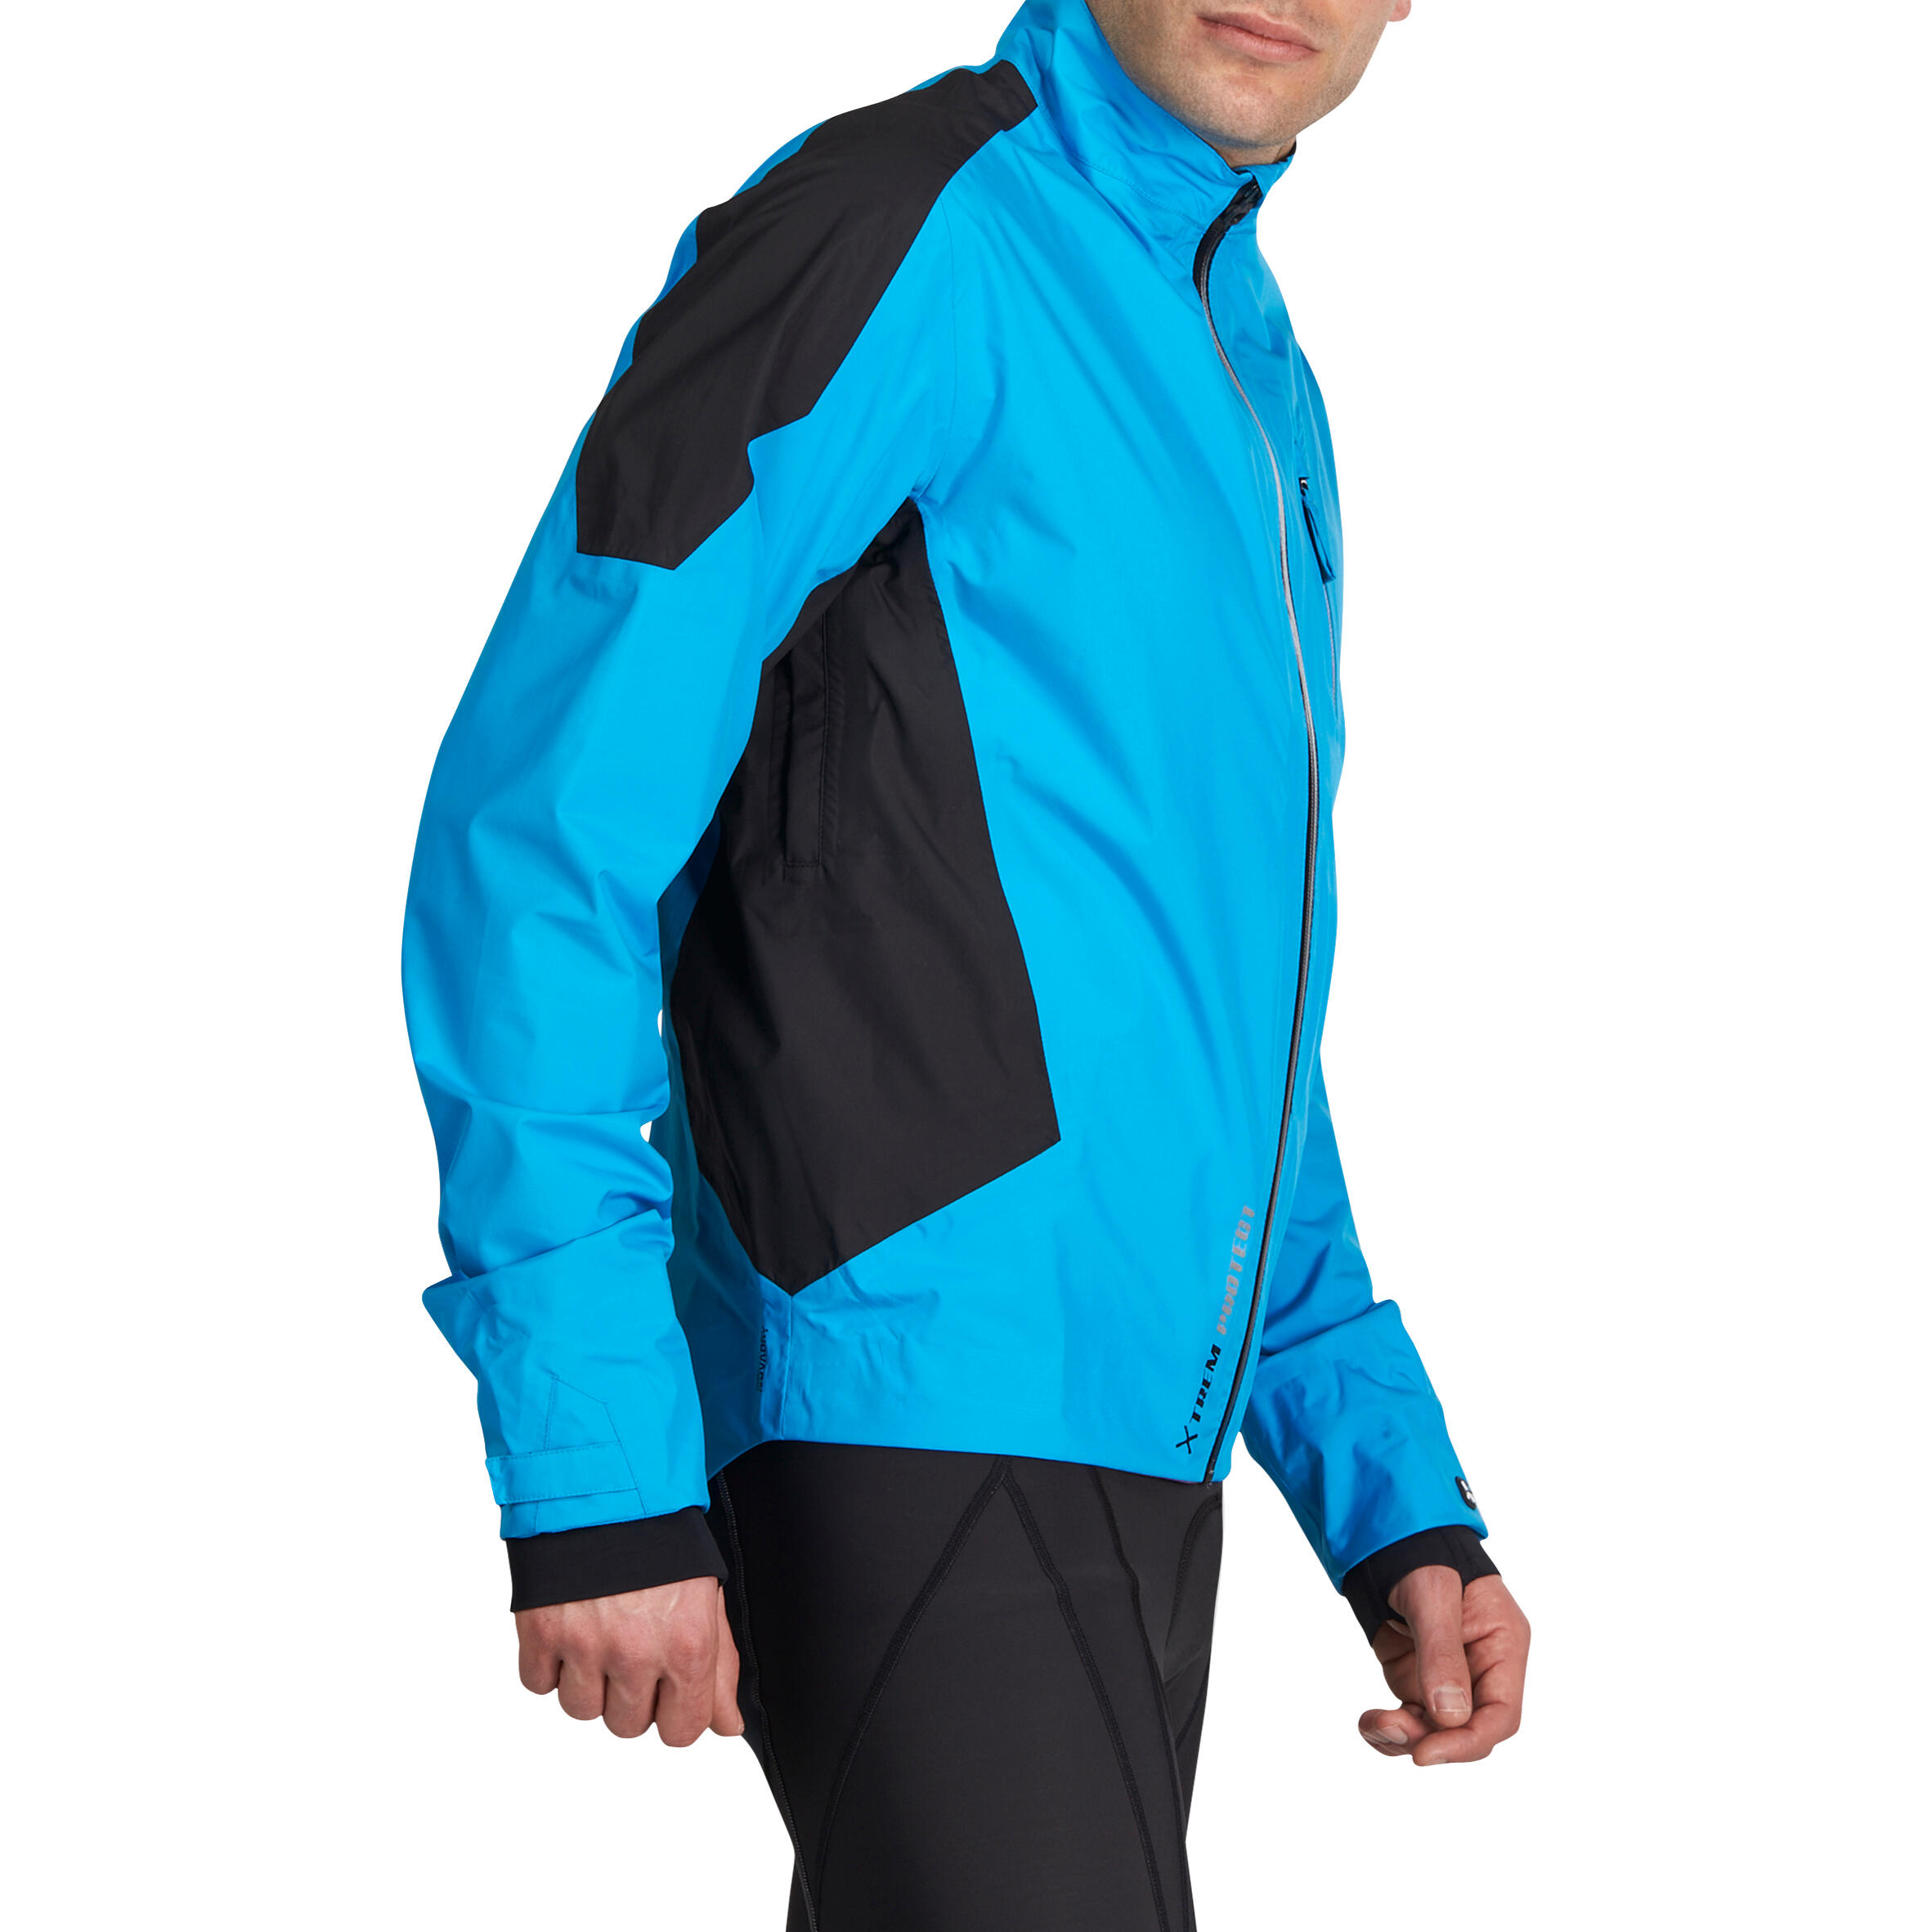 900 Mountain Biking Rainproof Jacket - Blue/Black 3/29